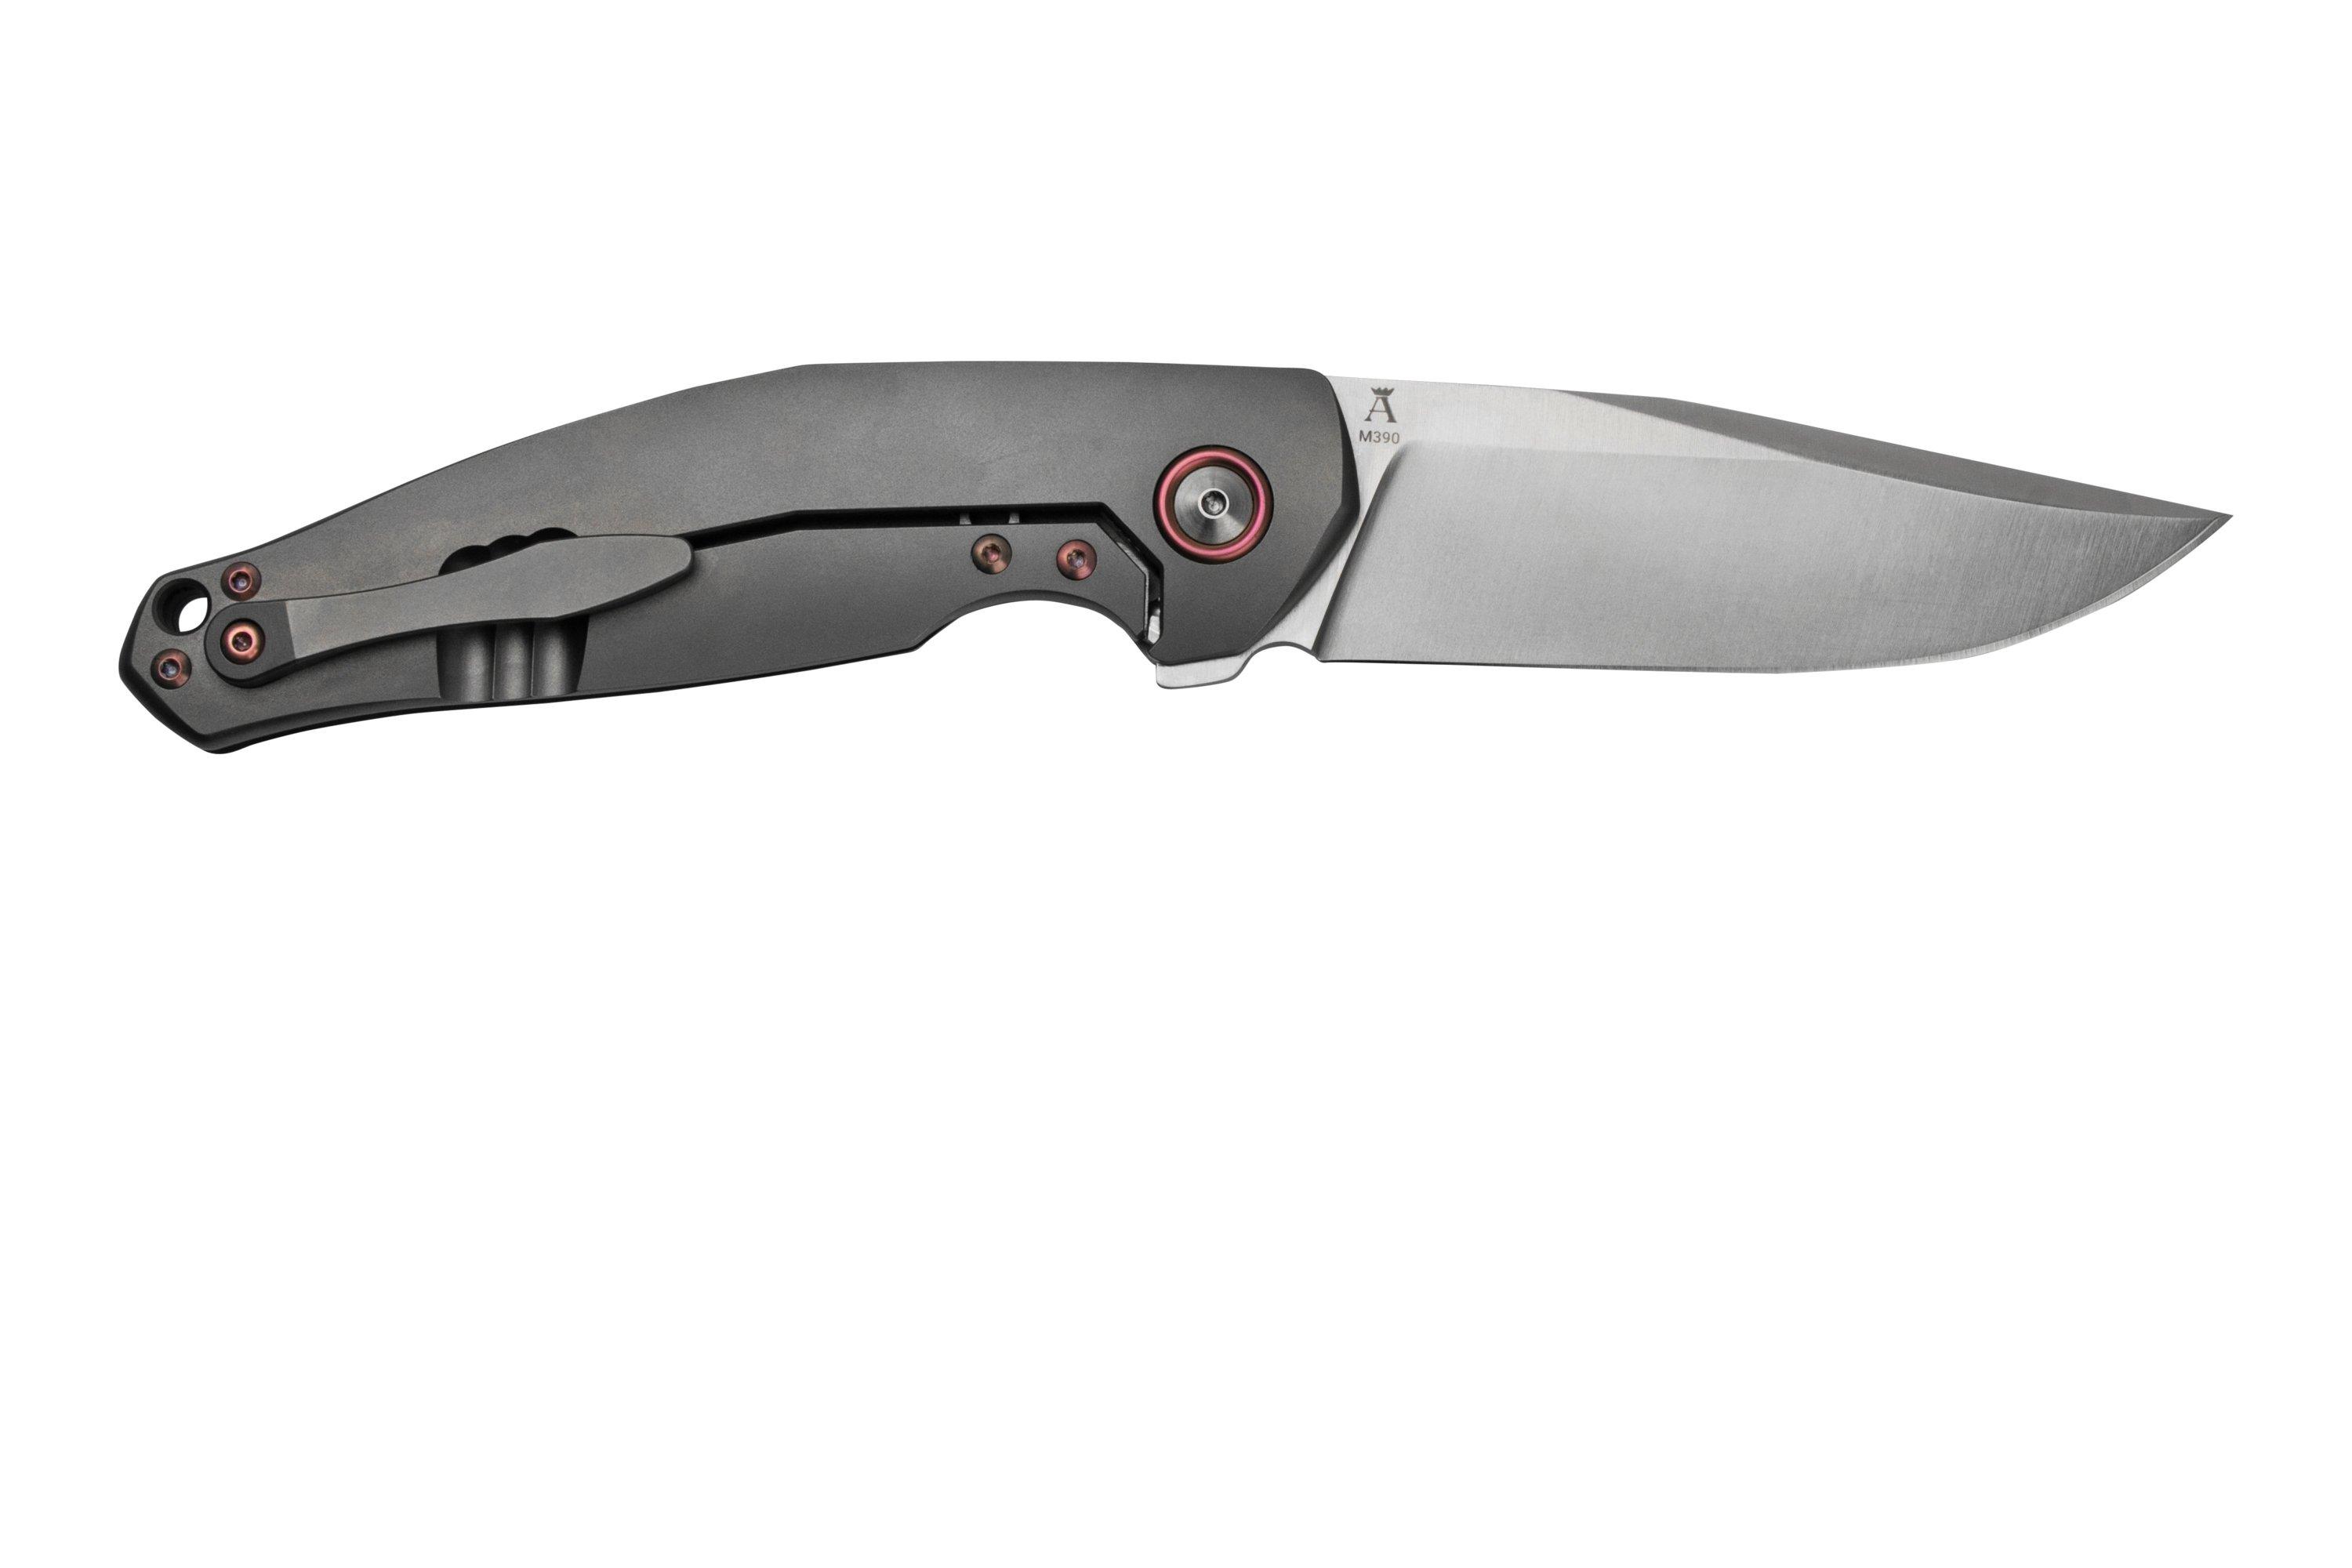 Böker Collection 2022 Bo01bo2022 Titanium Pocket Knife Advantageously Shopping At